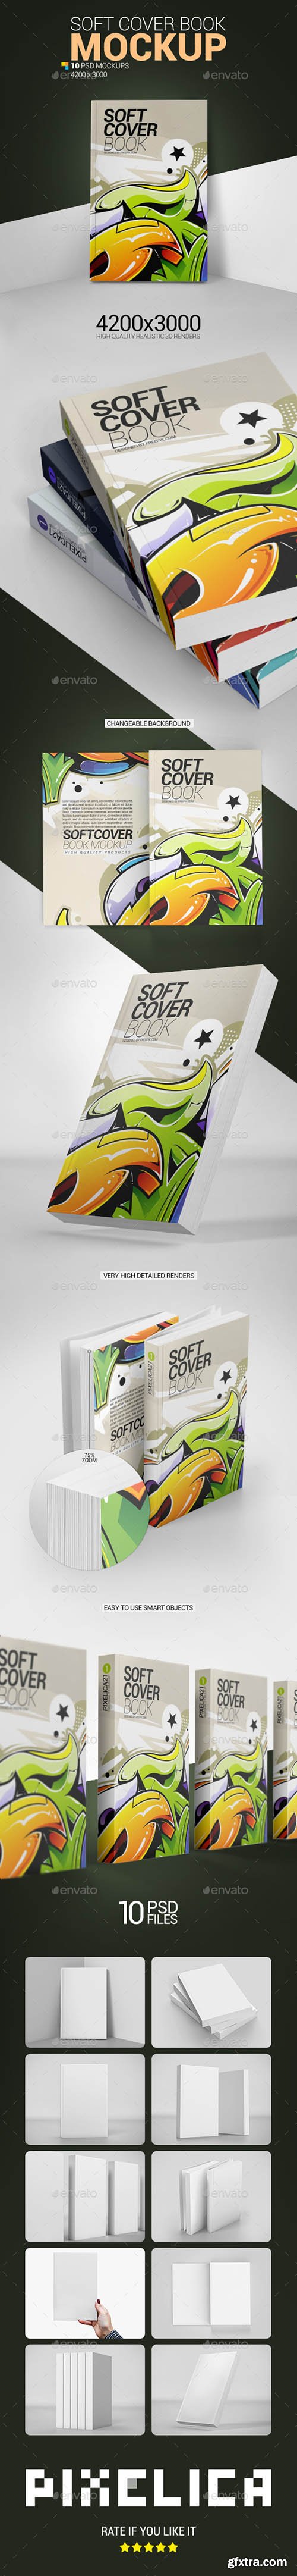 GraphicRiver - Soft Cover Book Mockup 25221896